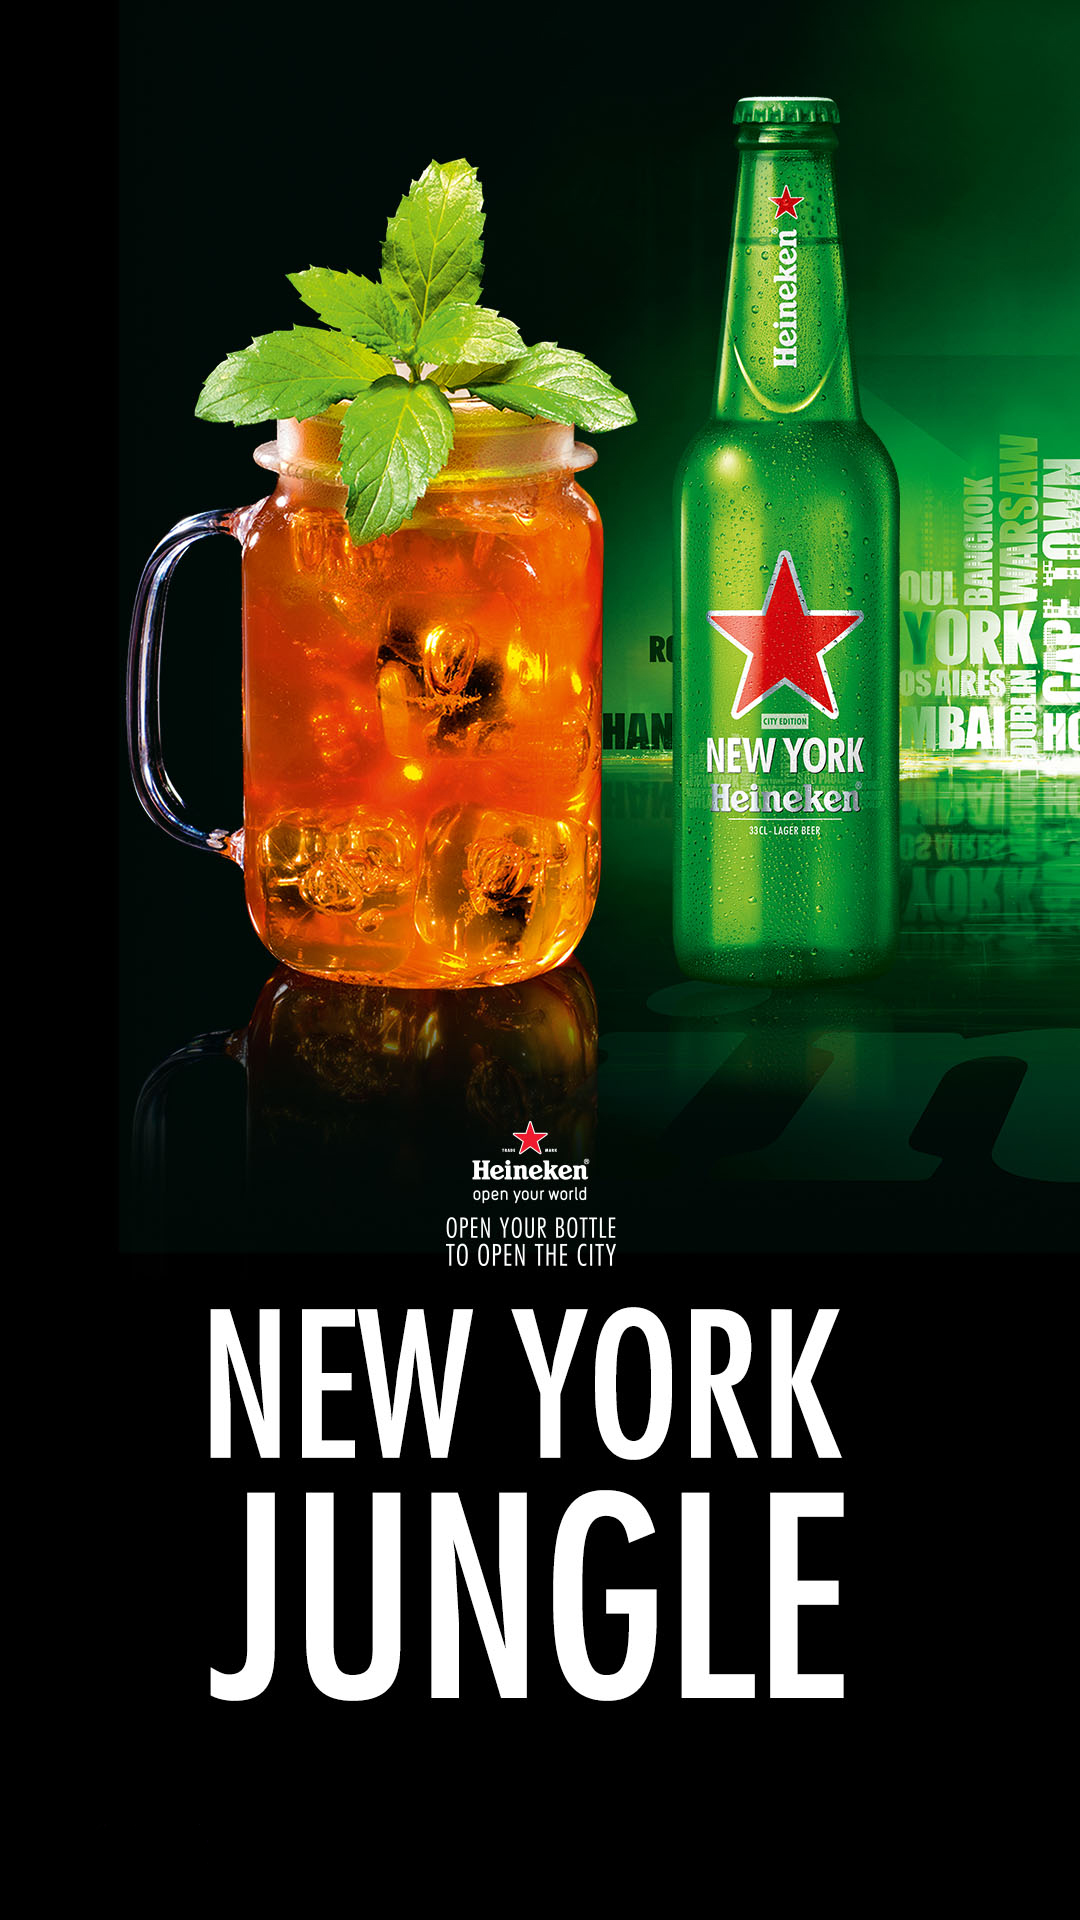 New York Jungle Cocktail Beer Heineken Android Wallpaper free download